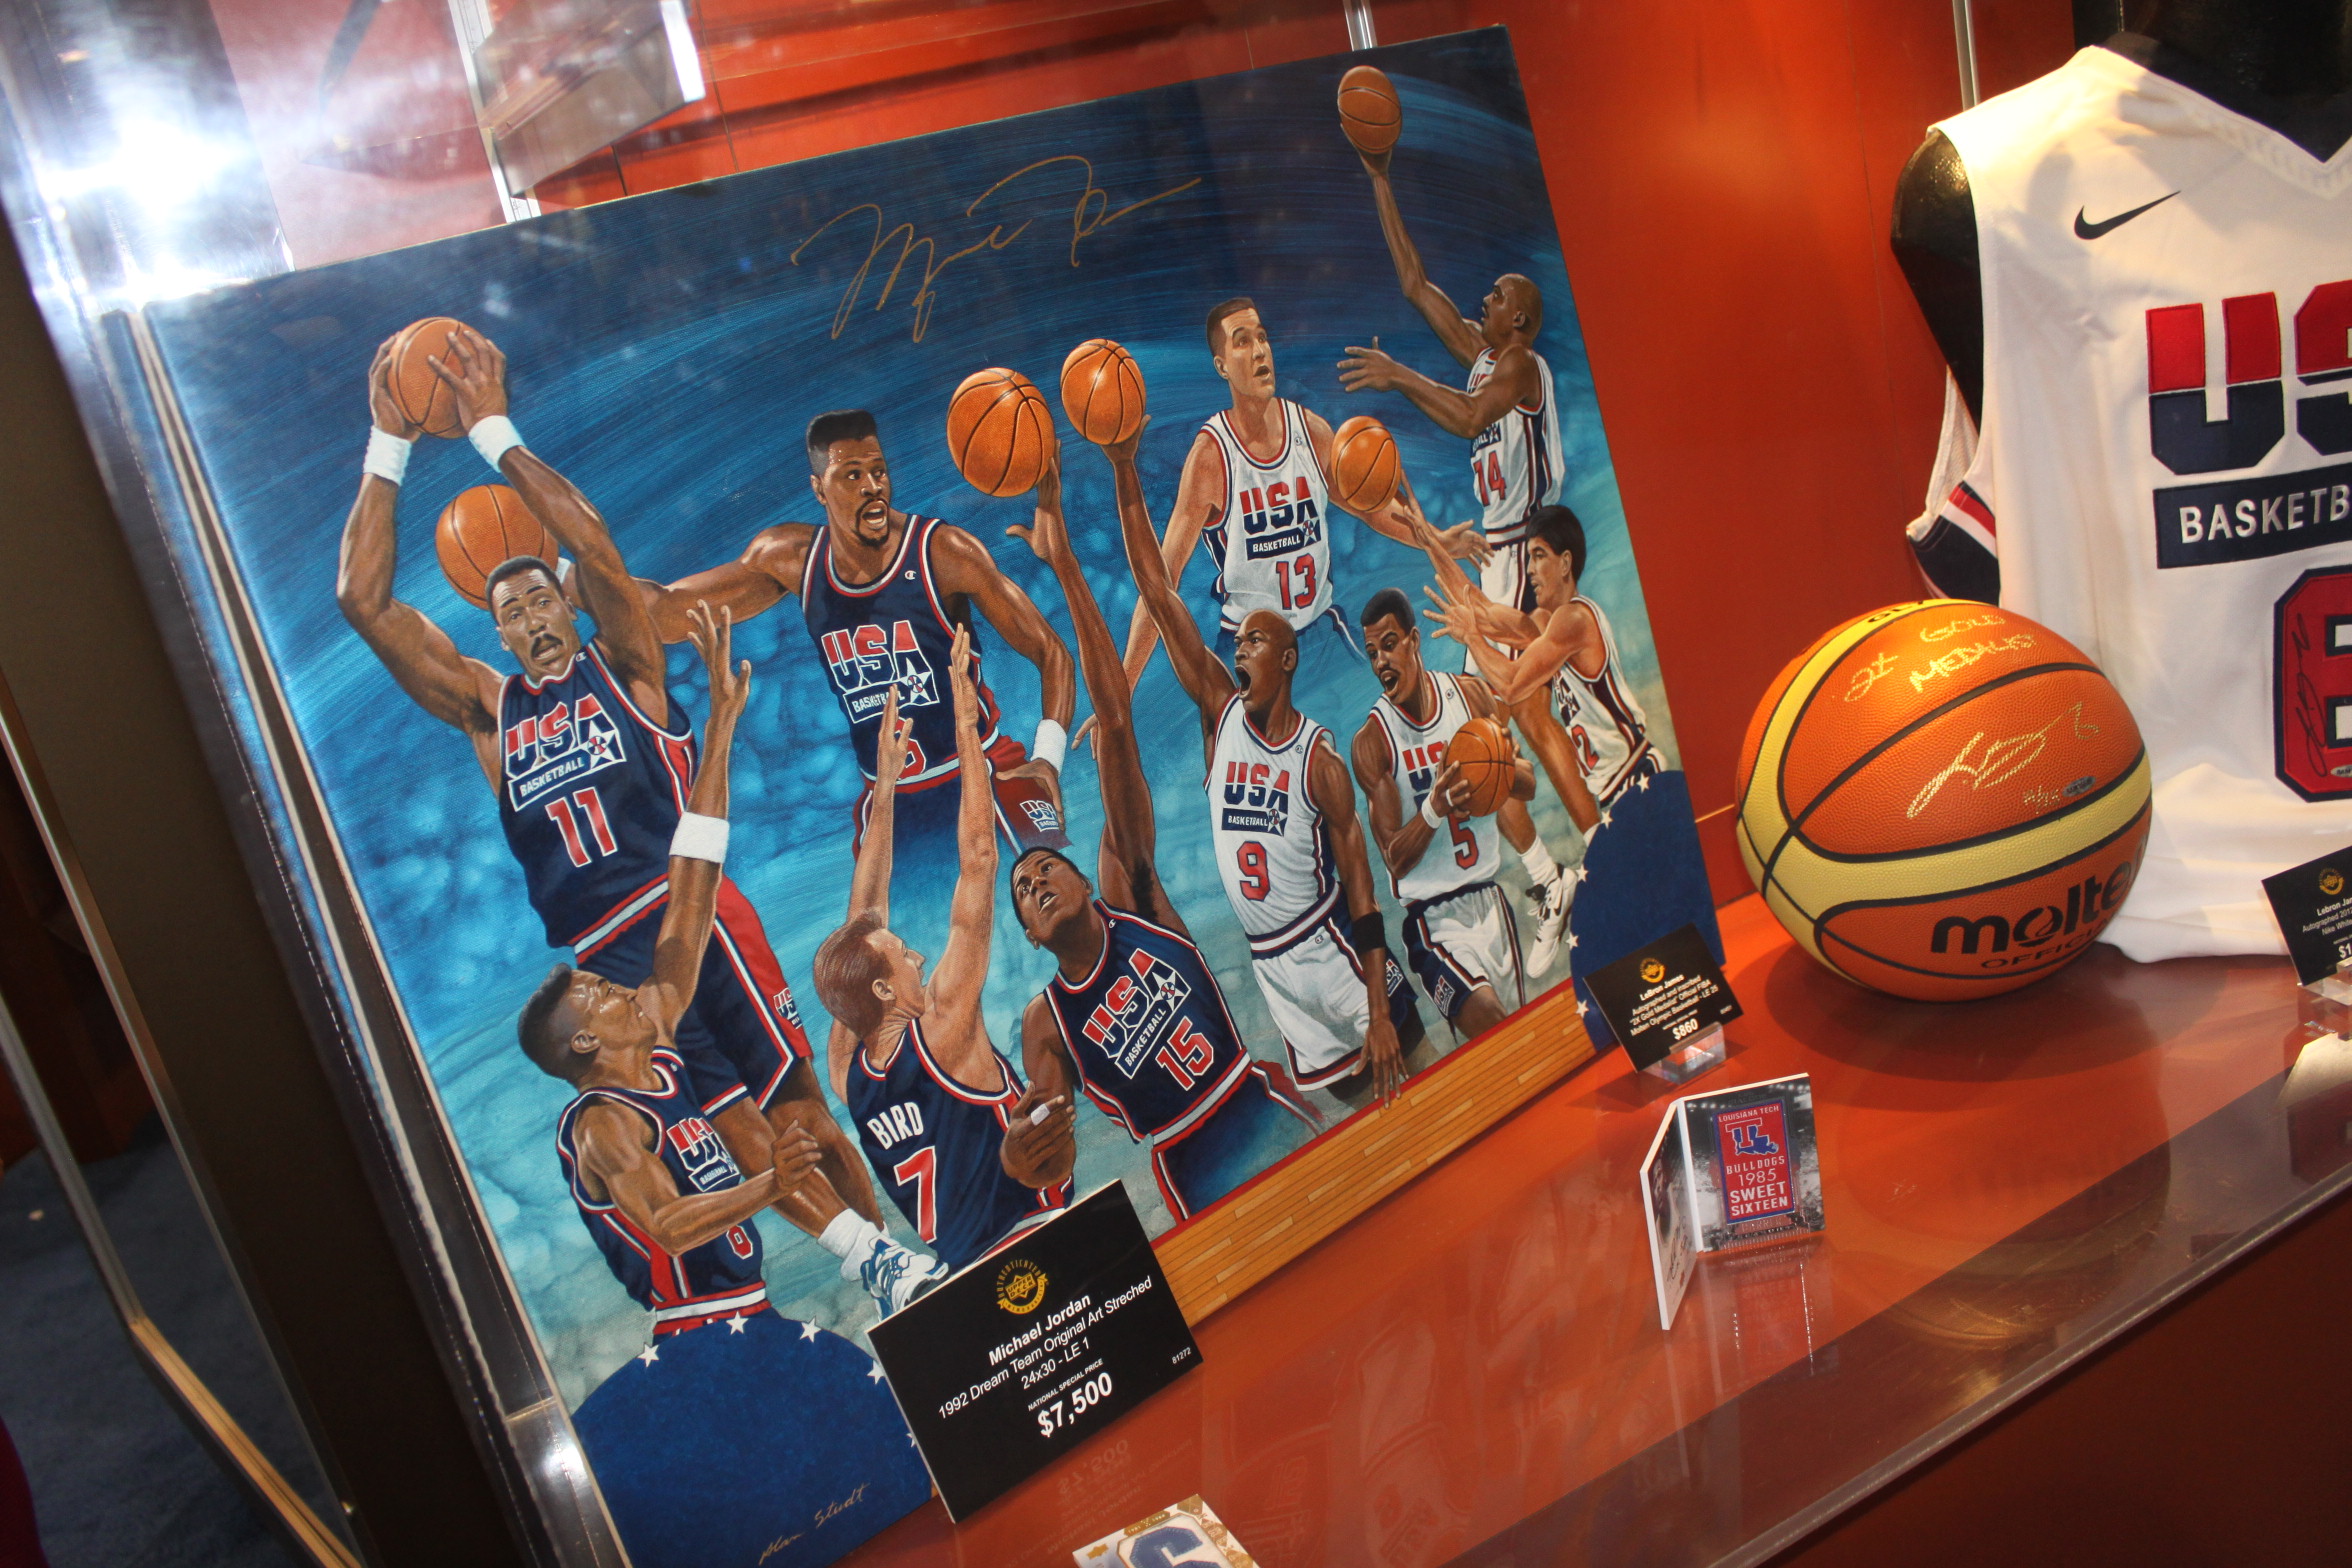 Michael Jordan 1997 UD Game Jersey Autograph Nets $840,000